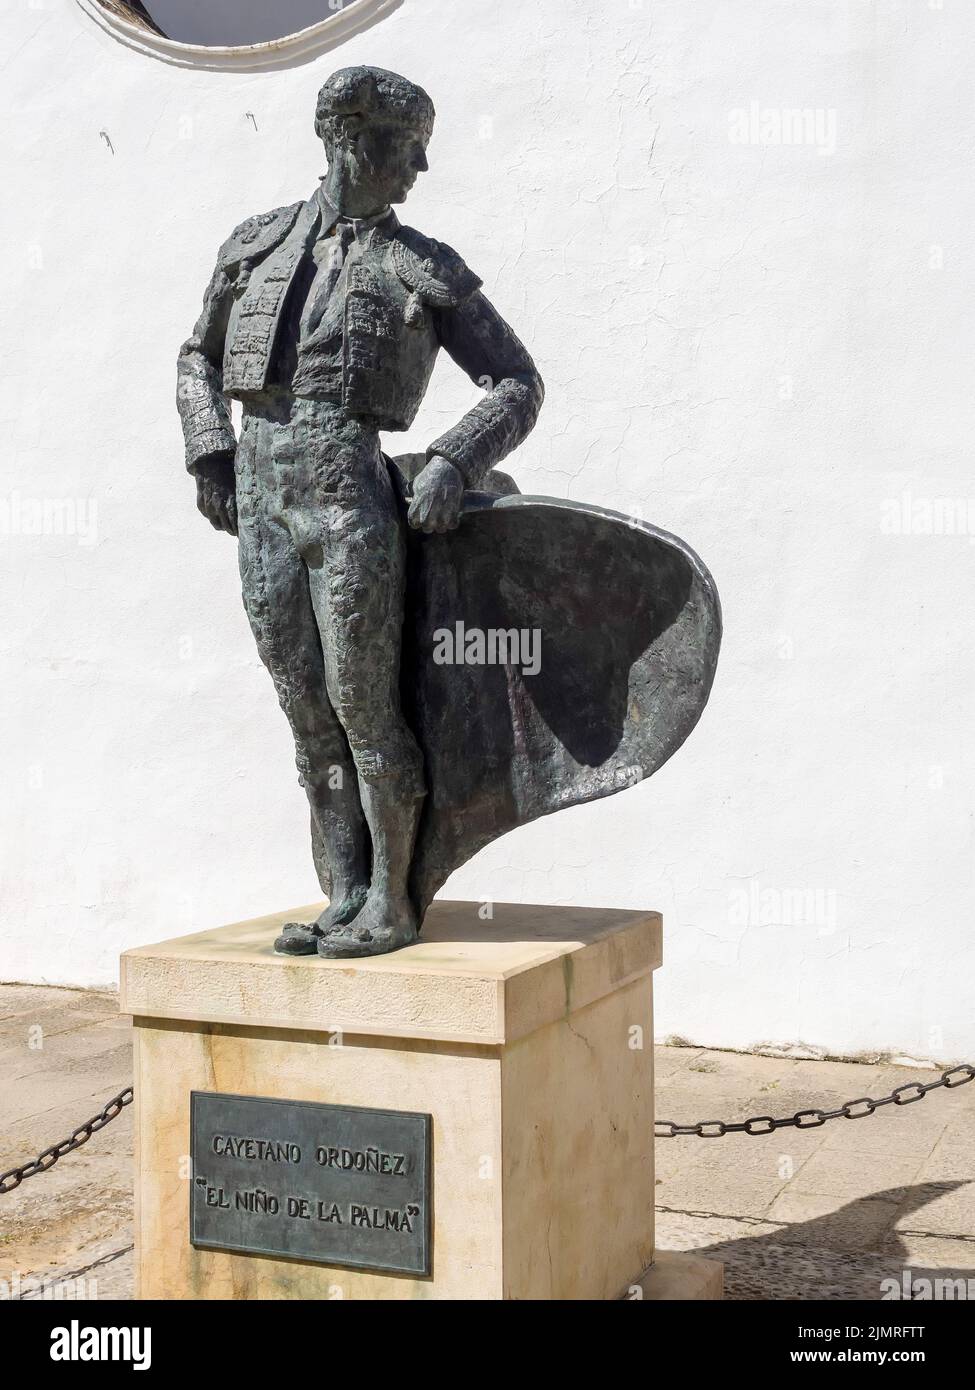 RONDA, ANDALUCIA/SPAIN - MAY 8 : Statue of Cayetano Ordonez El nino de la Palma bullfighter in Ronda Andalucia Spain on May 8, 2 Stock Photo